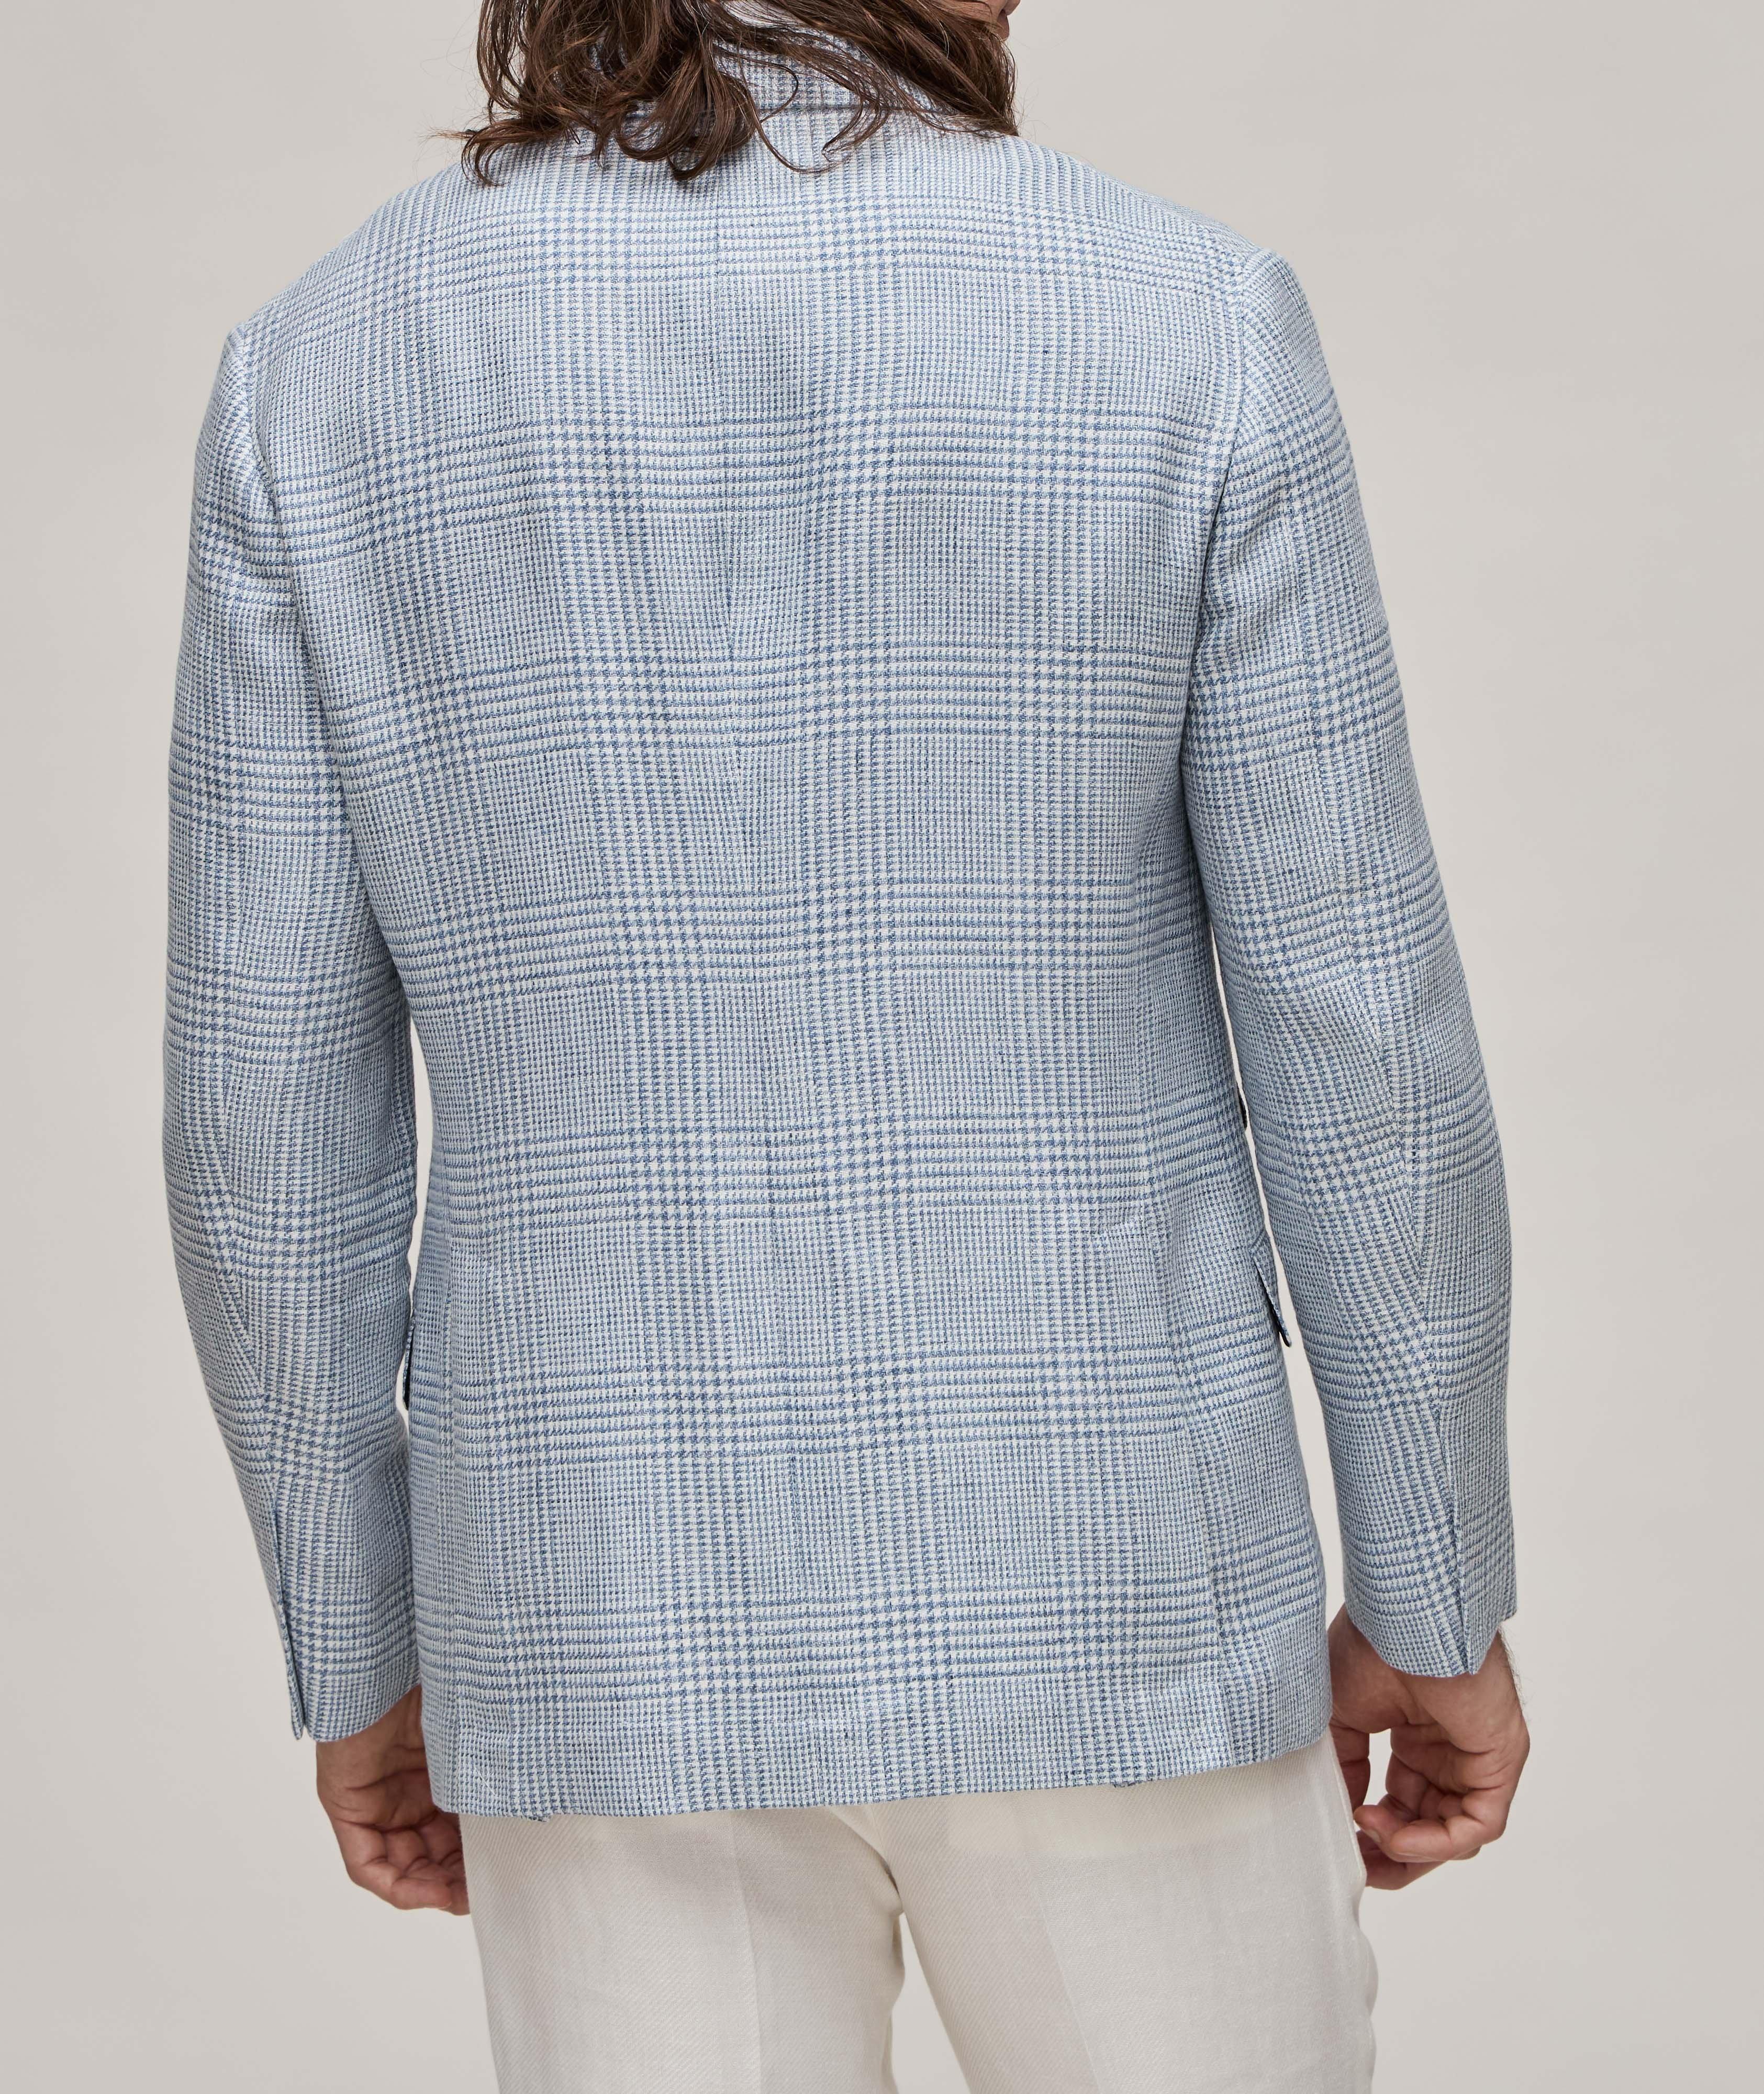 Glen Check Cavallo Linen, Wool & Silk Sport Jacket image 2